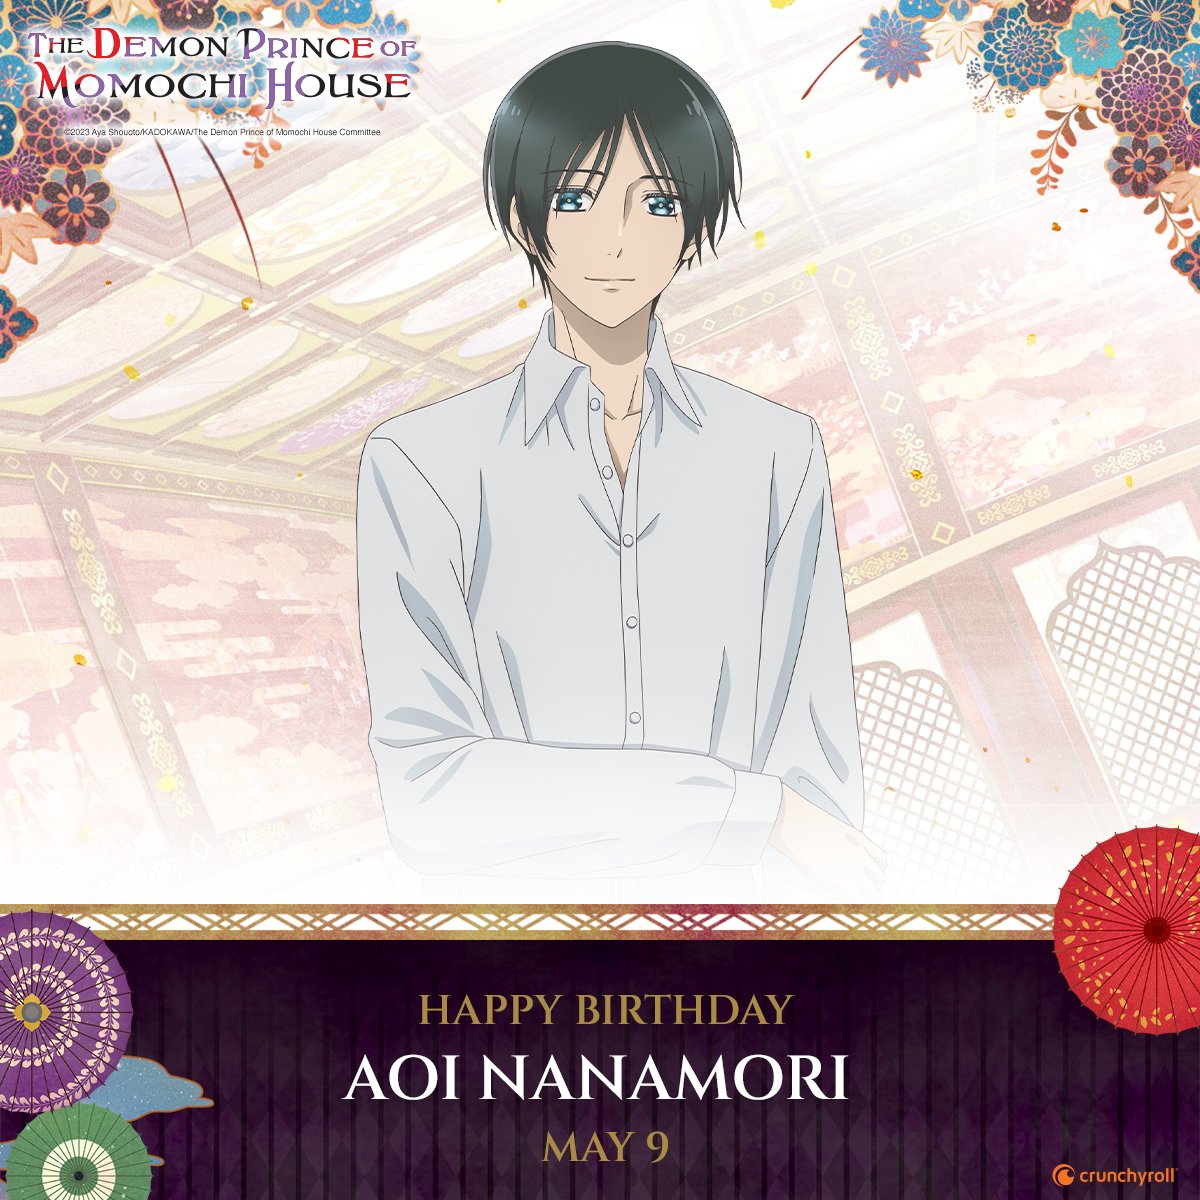 Happy birthday, Aoi! 🎂 ❤️